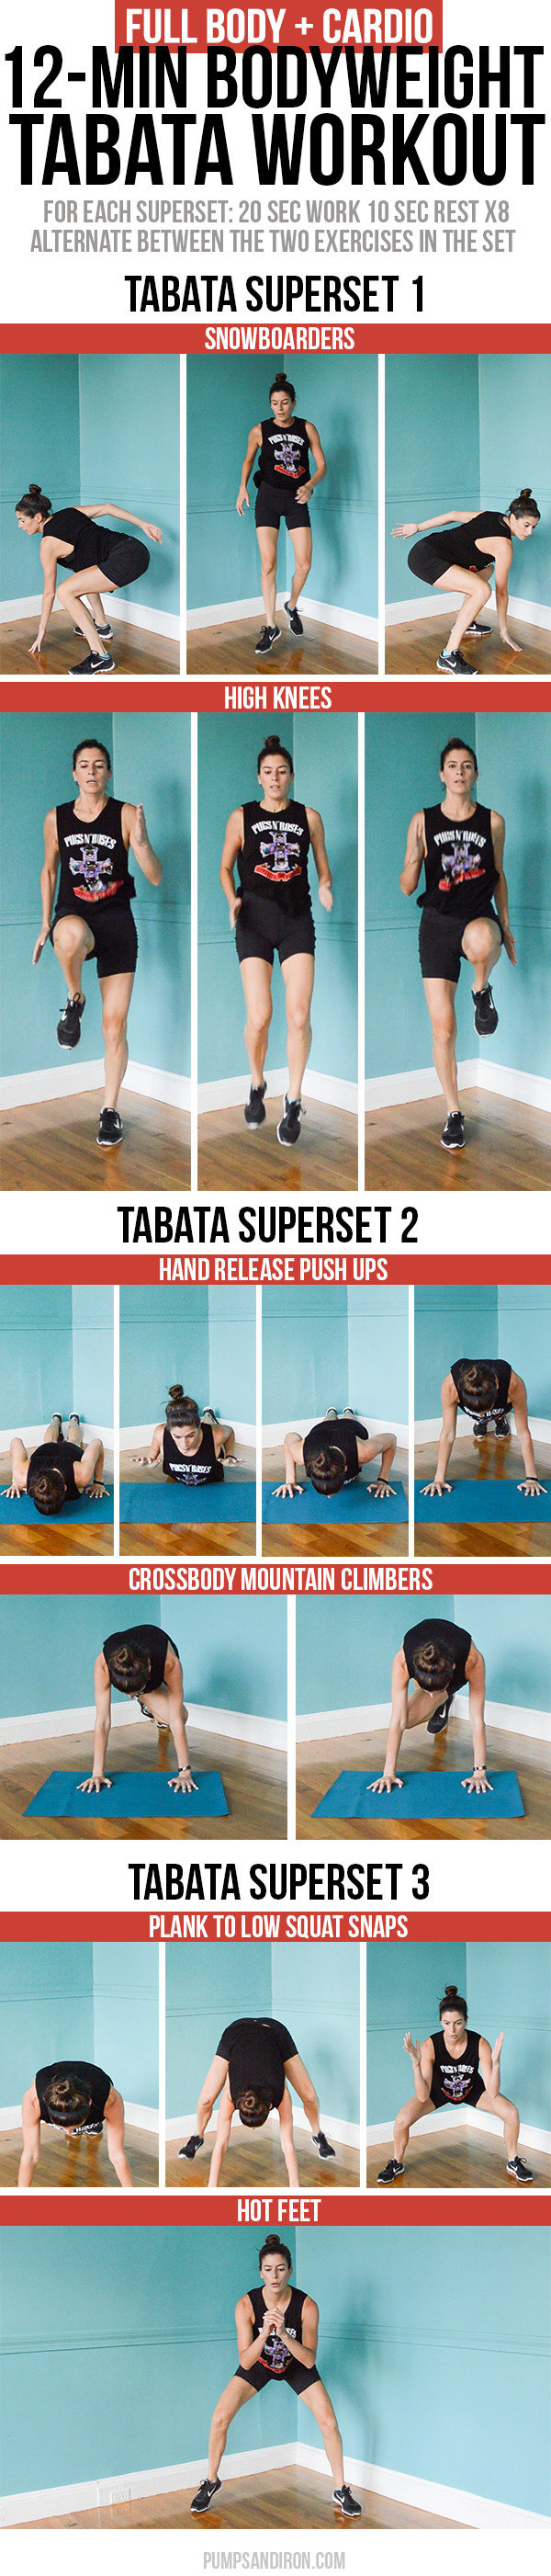 Minute Bodyweight Tabata Workout Series Full Body Cardio